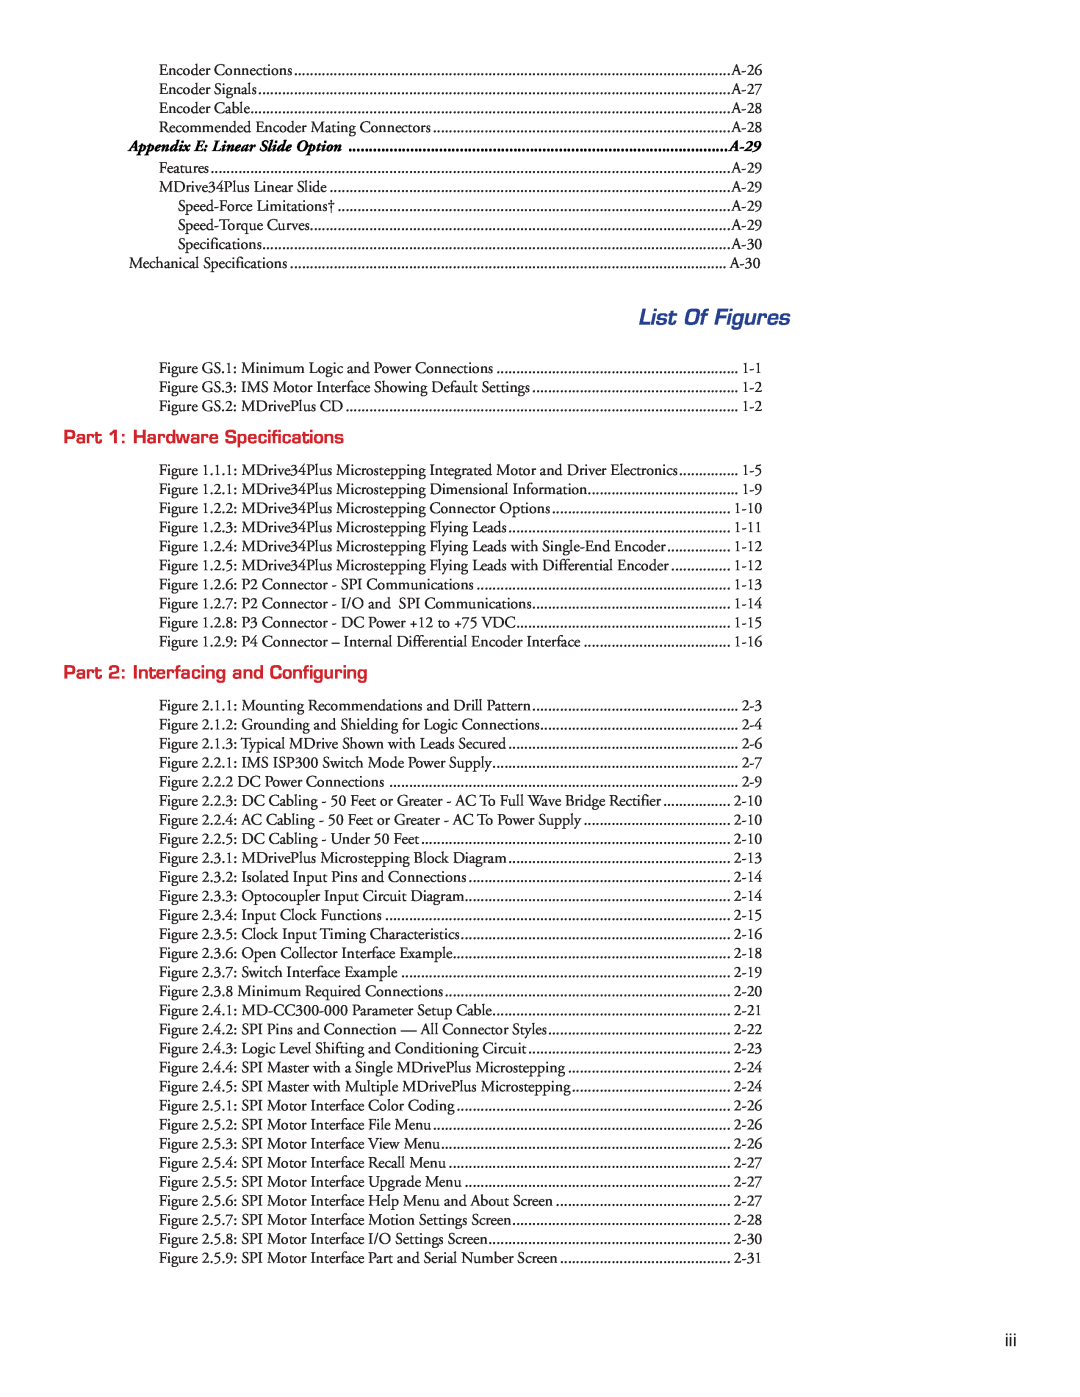 Intelligent Motion Systems MDrive34Plus List Of Figures, Part 1 Hardware Specifications, Appendix E Linear Slide Option 